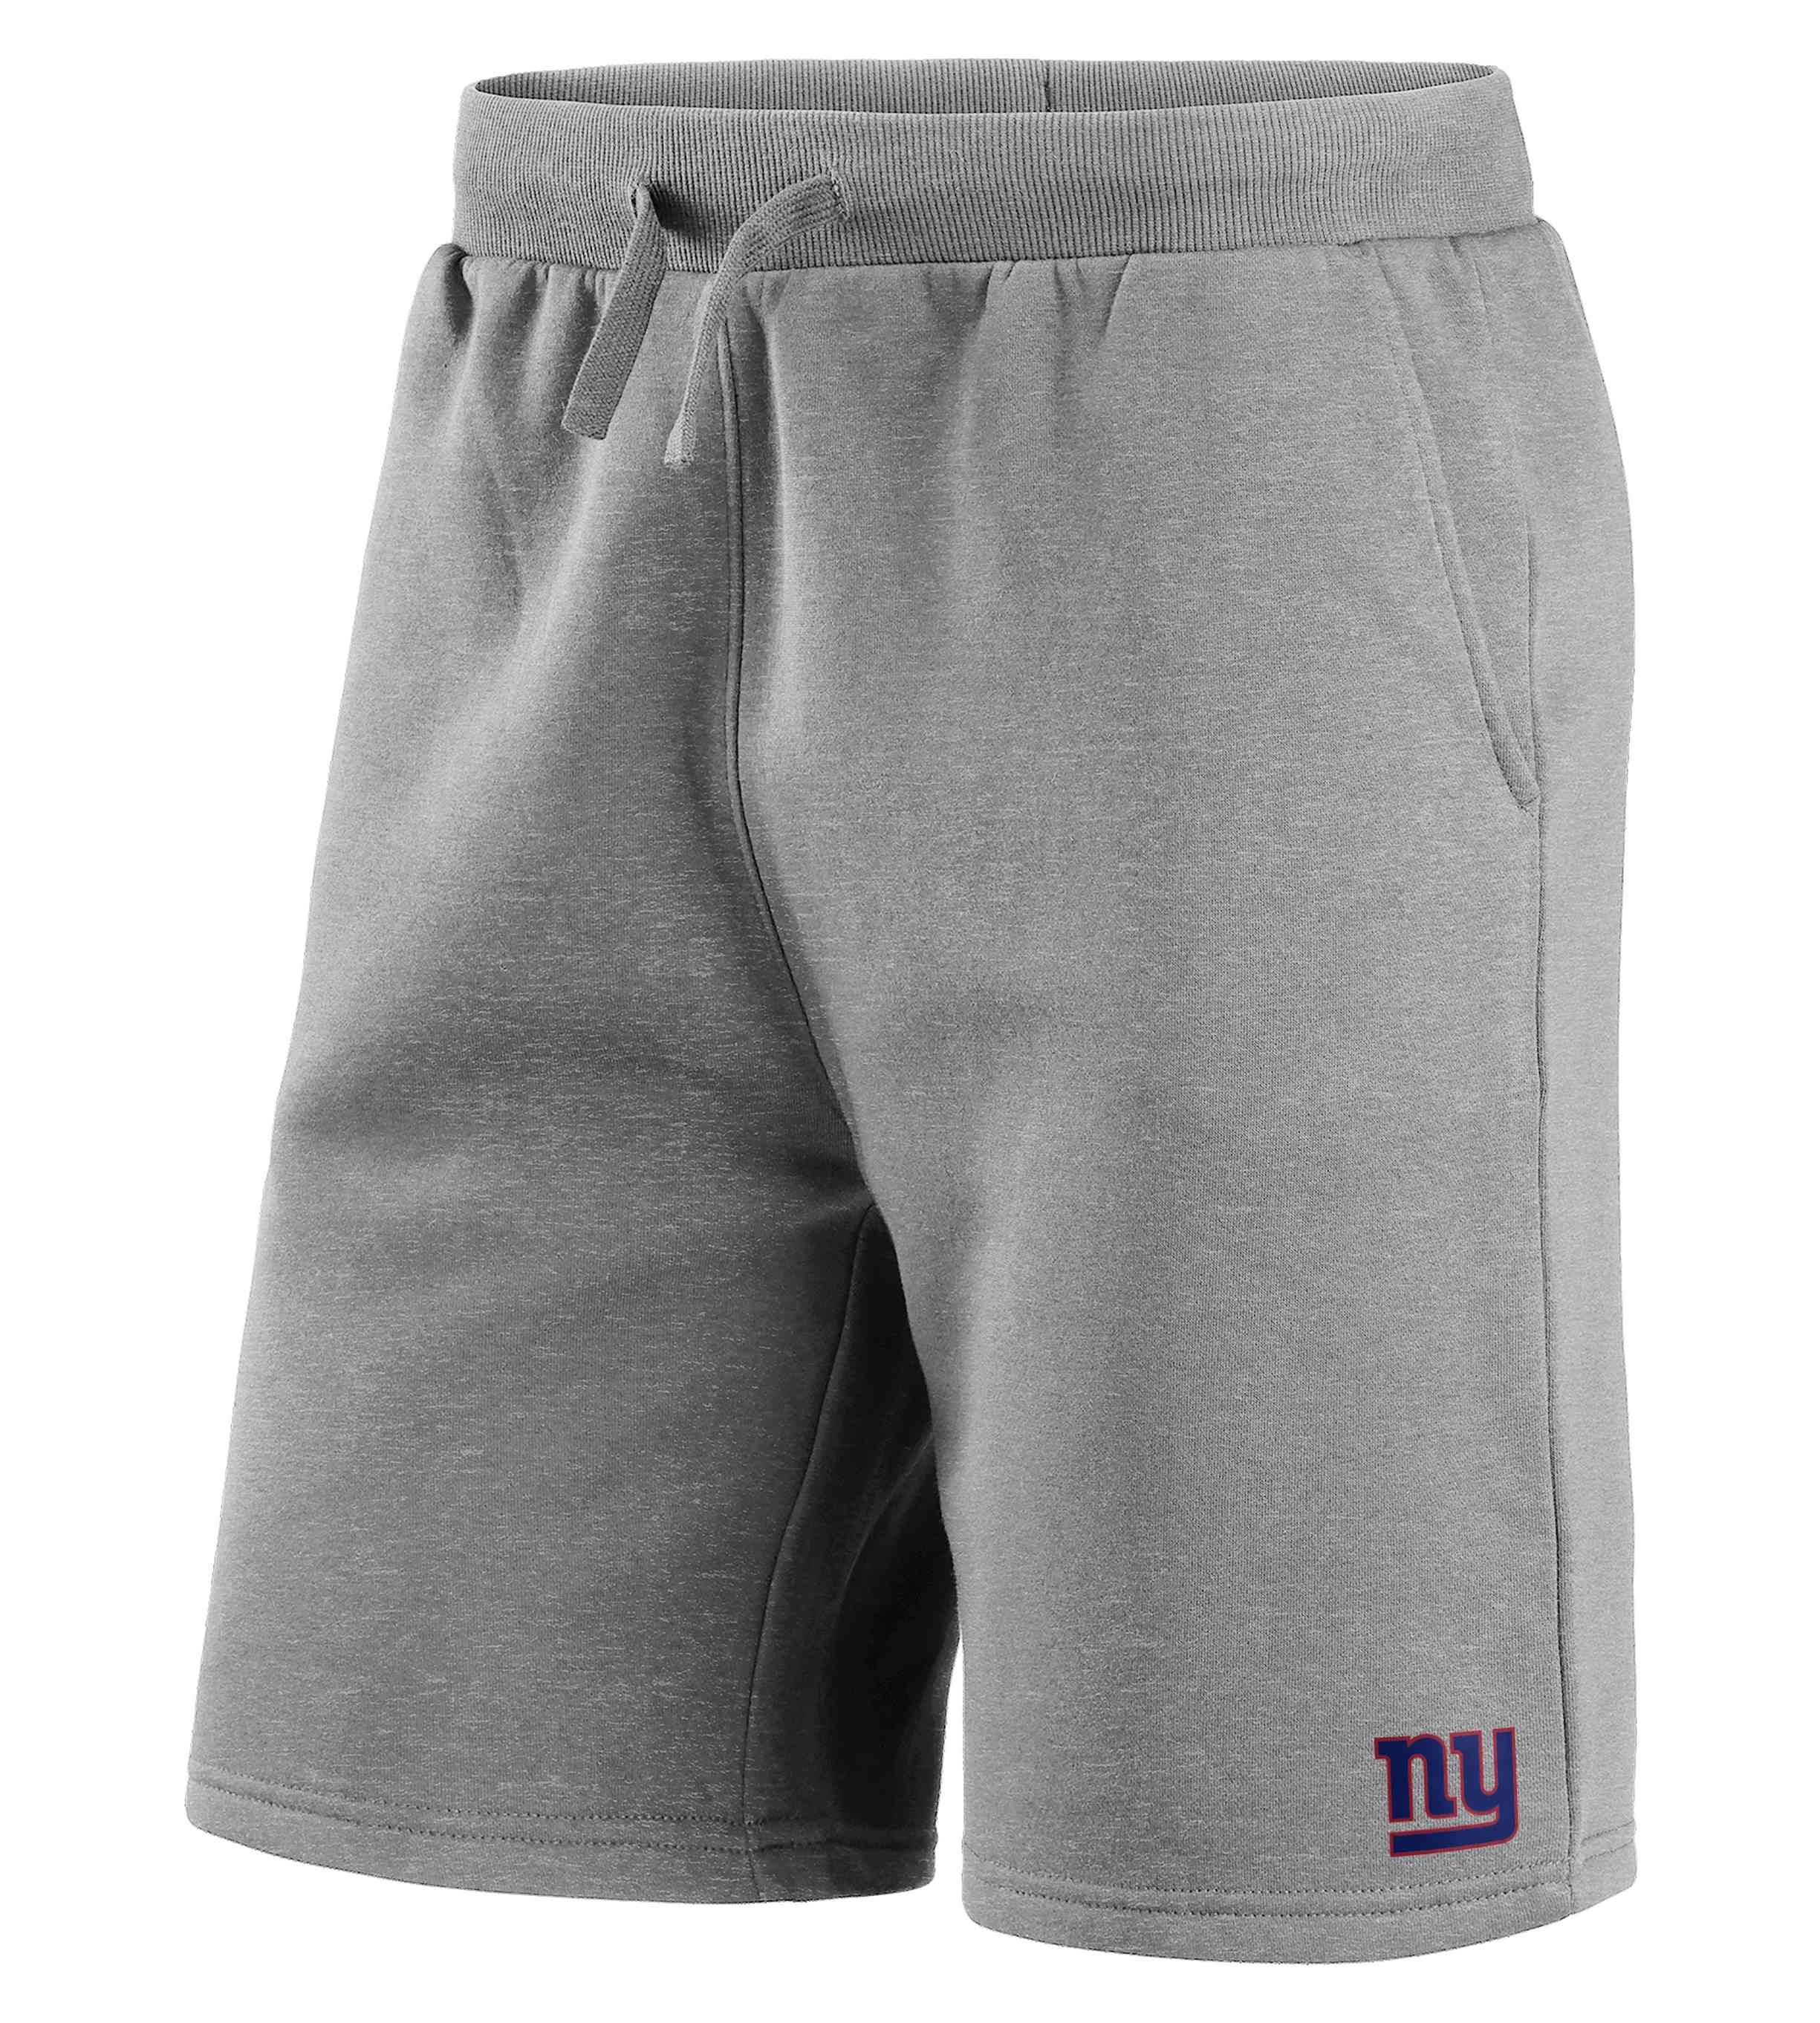 New NFL Giants Fanatics Sweat Shorts Logo York Primary Graphic